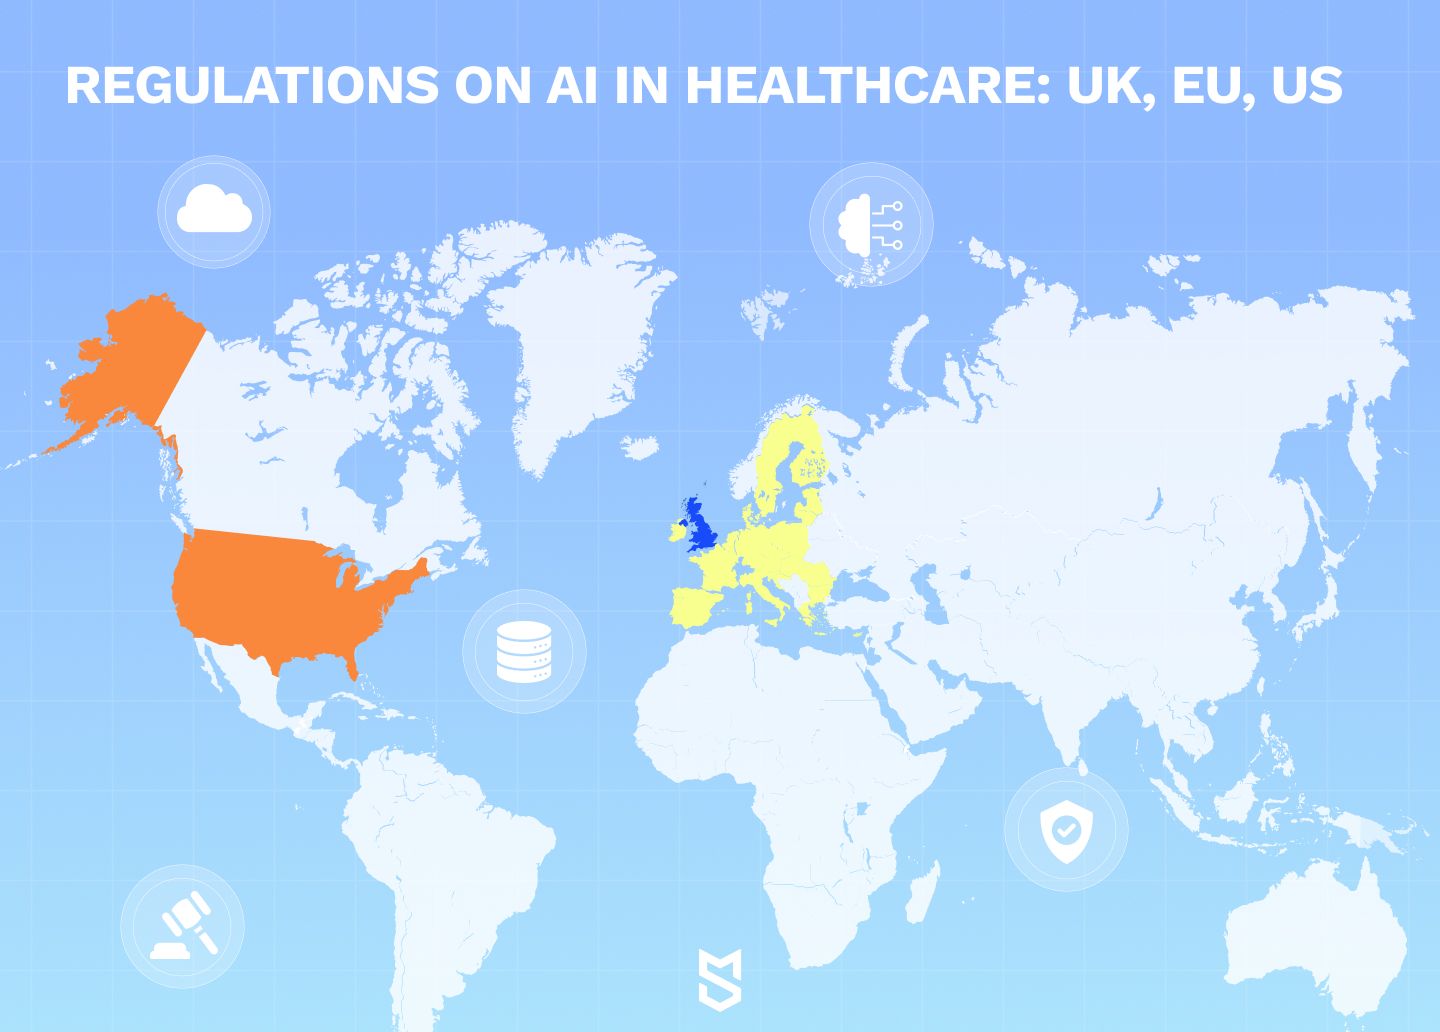 Regulations on AI in healthcare: UK, EU, US